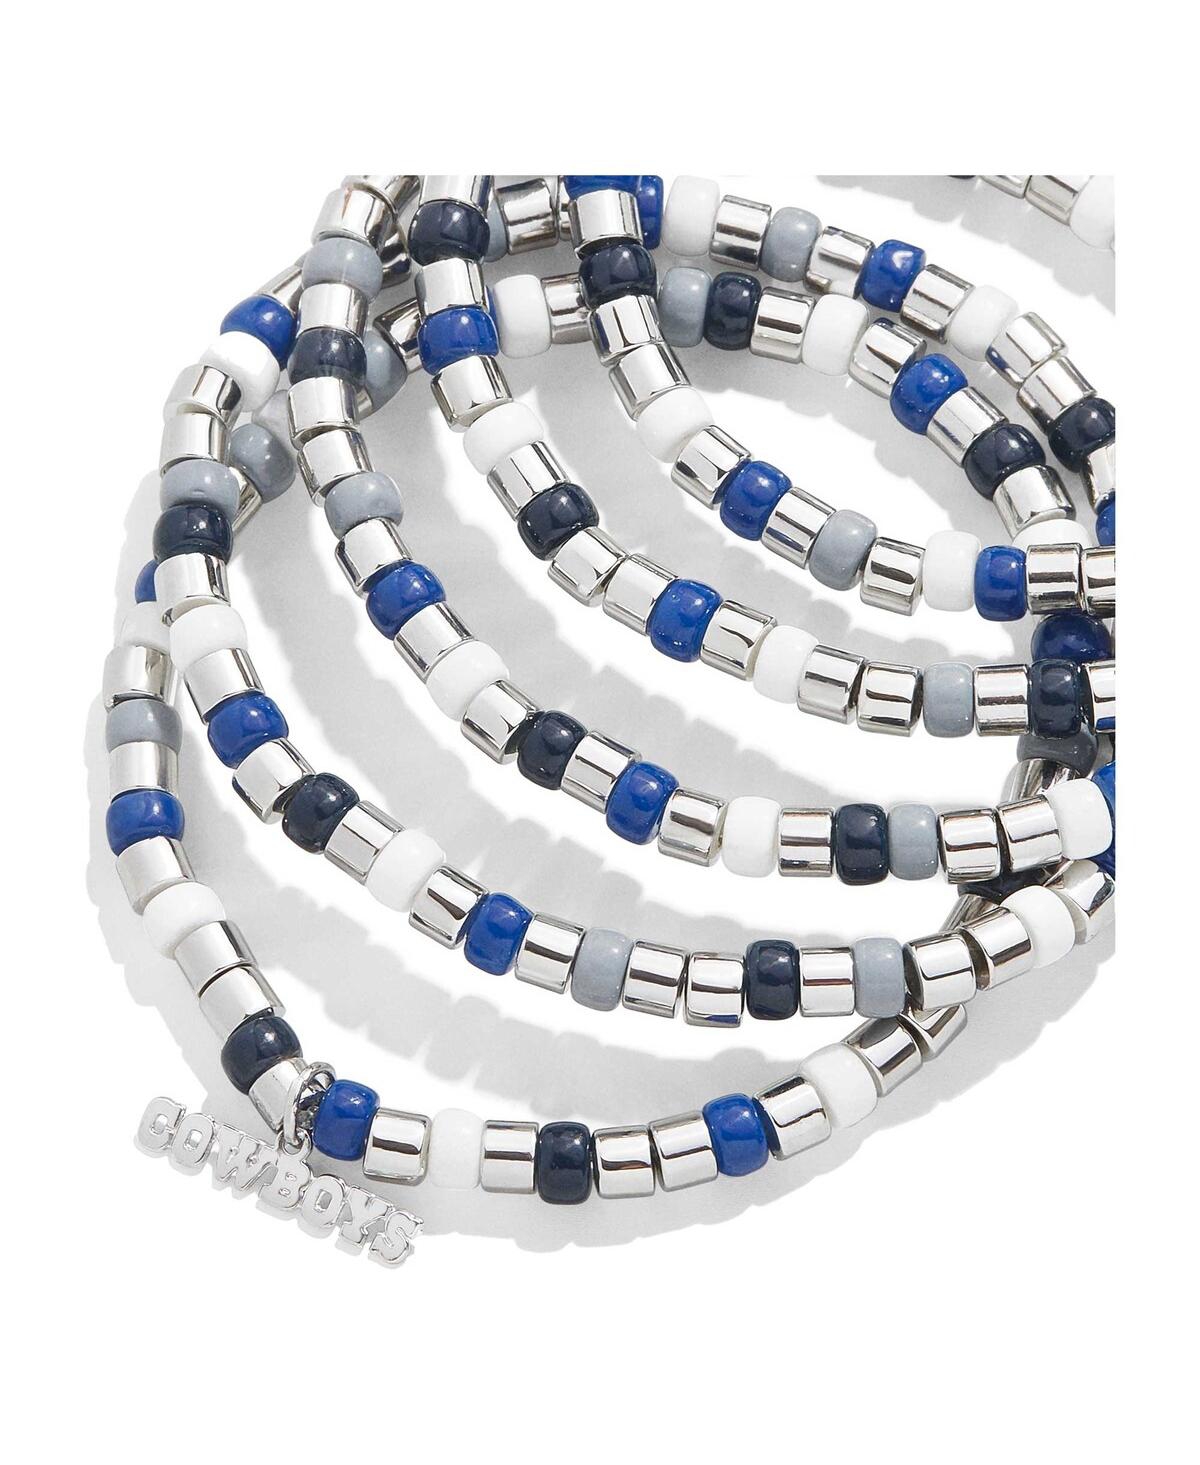 Women's Baublebar Dallas Cowboys Stack Bracelet - Multi